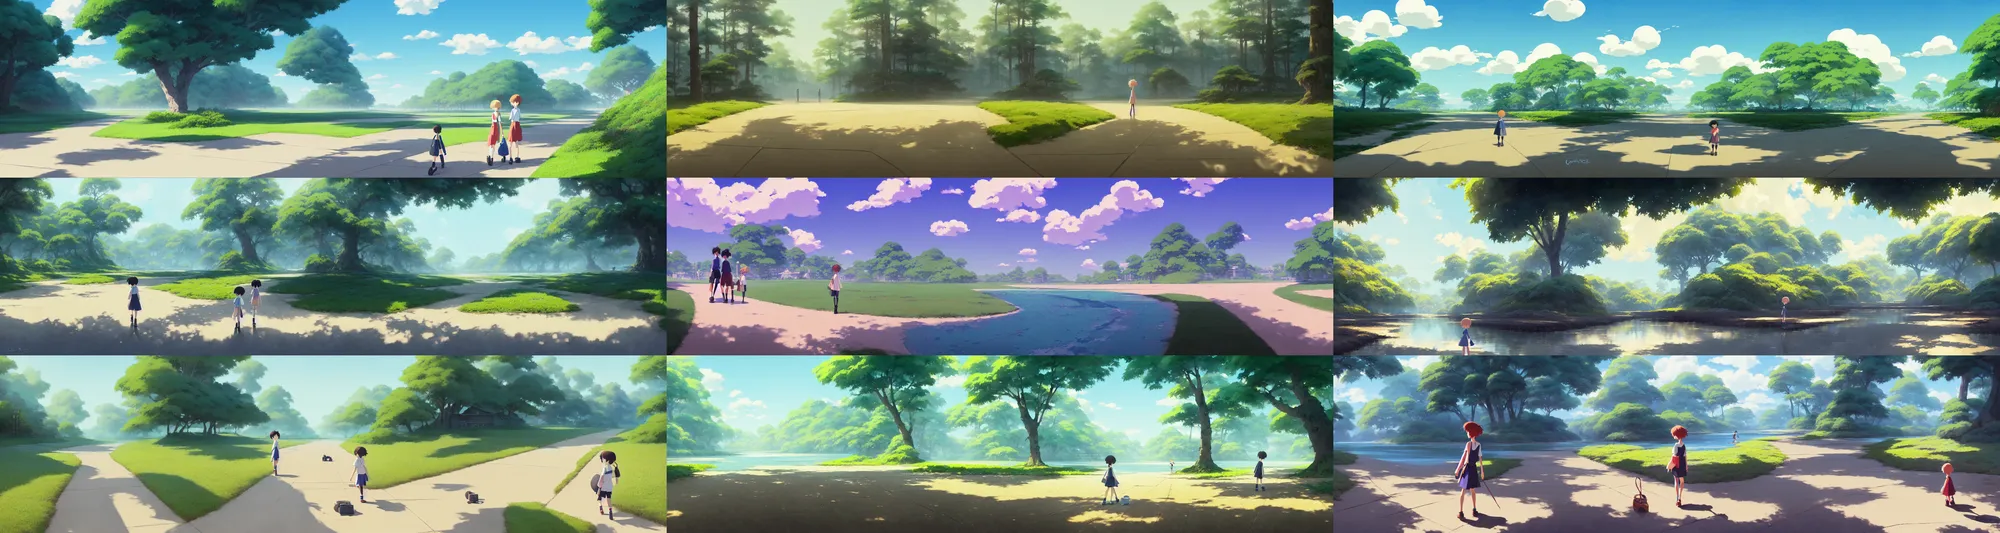 prompthunt: a beautiful screenshot from the mystical and nostalgic anime by  Hayao Miyazaki and Makoto Shinkai called My Grandfather, in the anime film  Kimi no na wa, trending on pixiv